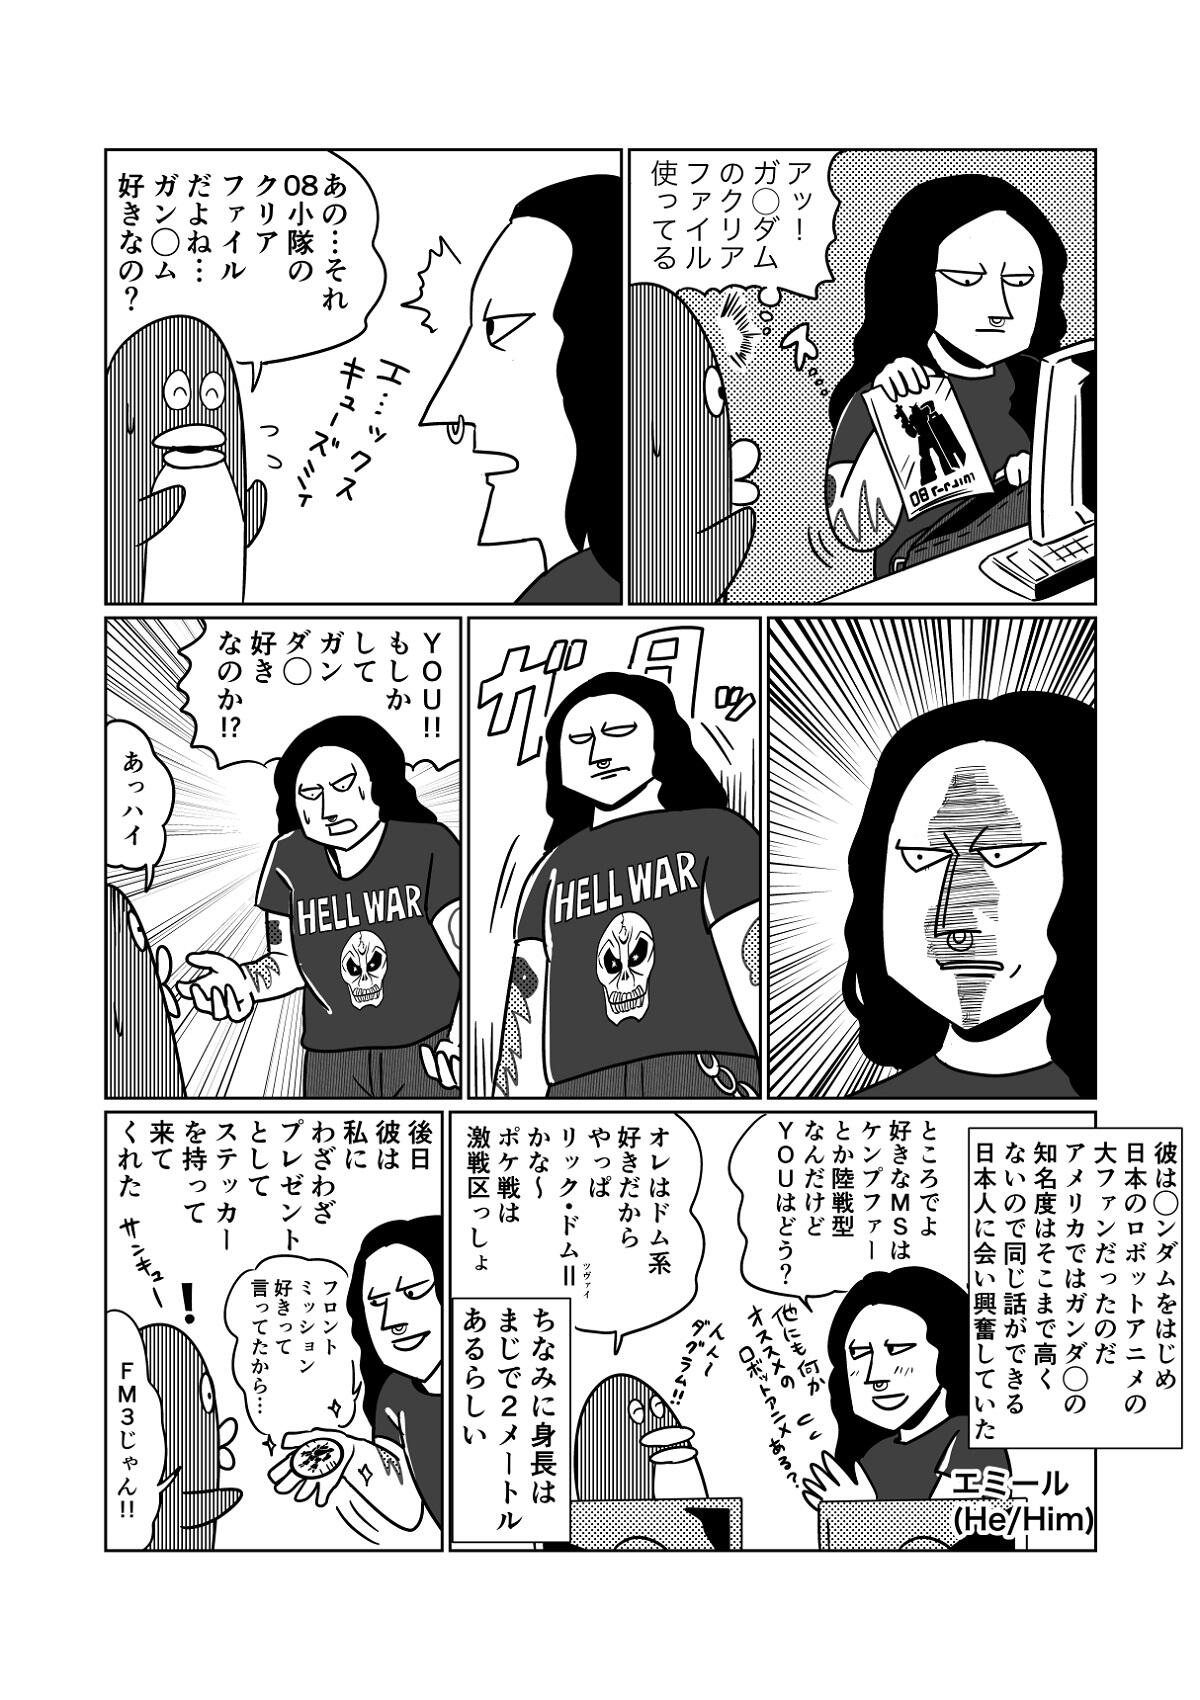 https://www.ryugaku.co.jp/column/images/8_5_1200.jpg